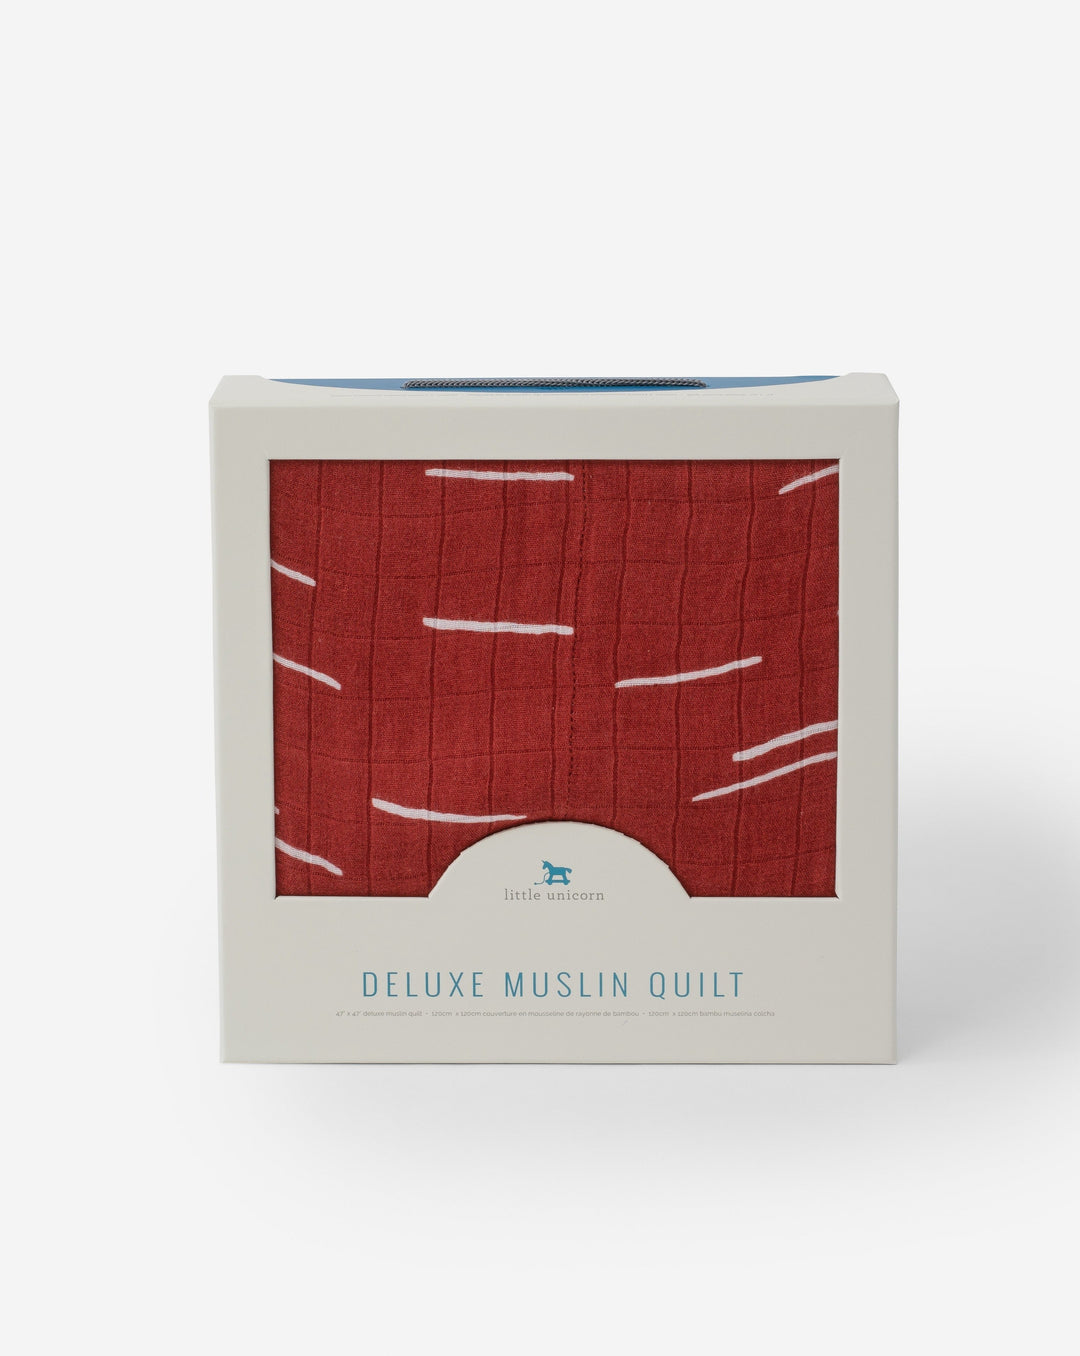 Little Unicorn Original Deluxe Muslin Quilt | Baked Clay